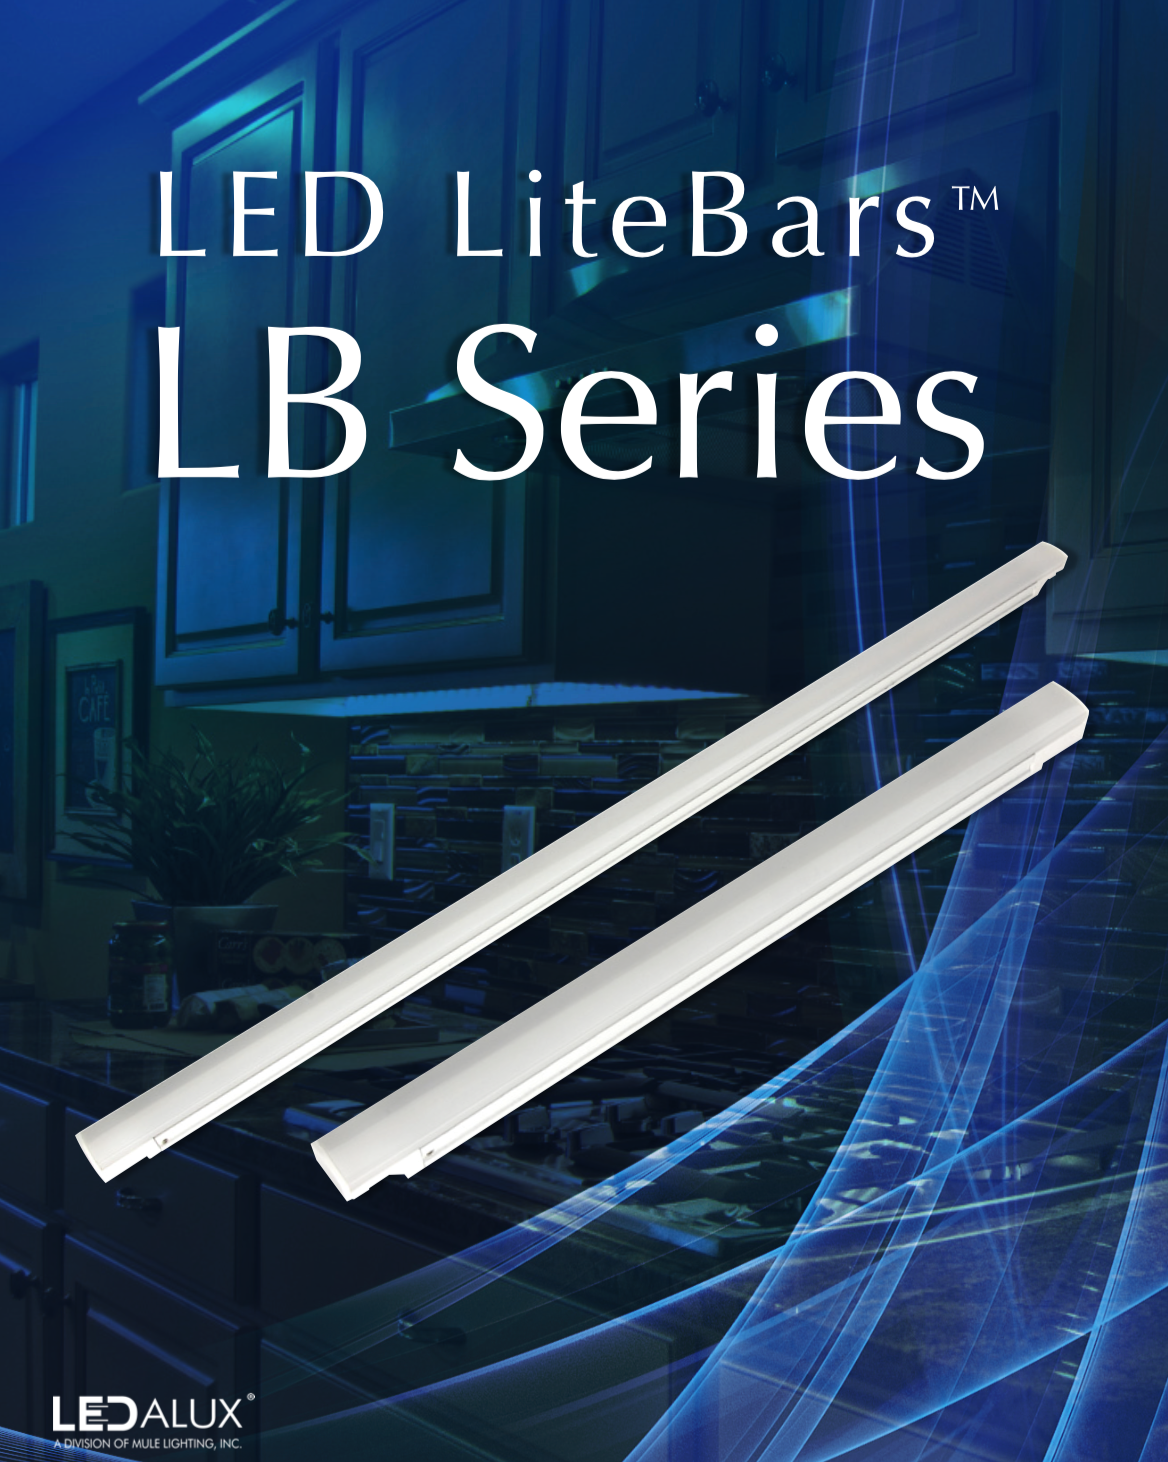 LEDalux LED LiteBars LB Series Literature